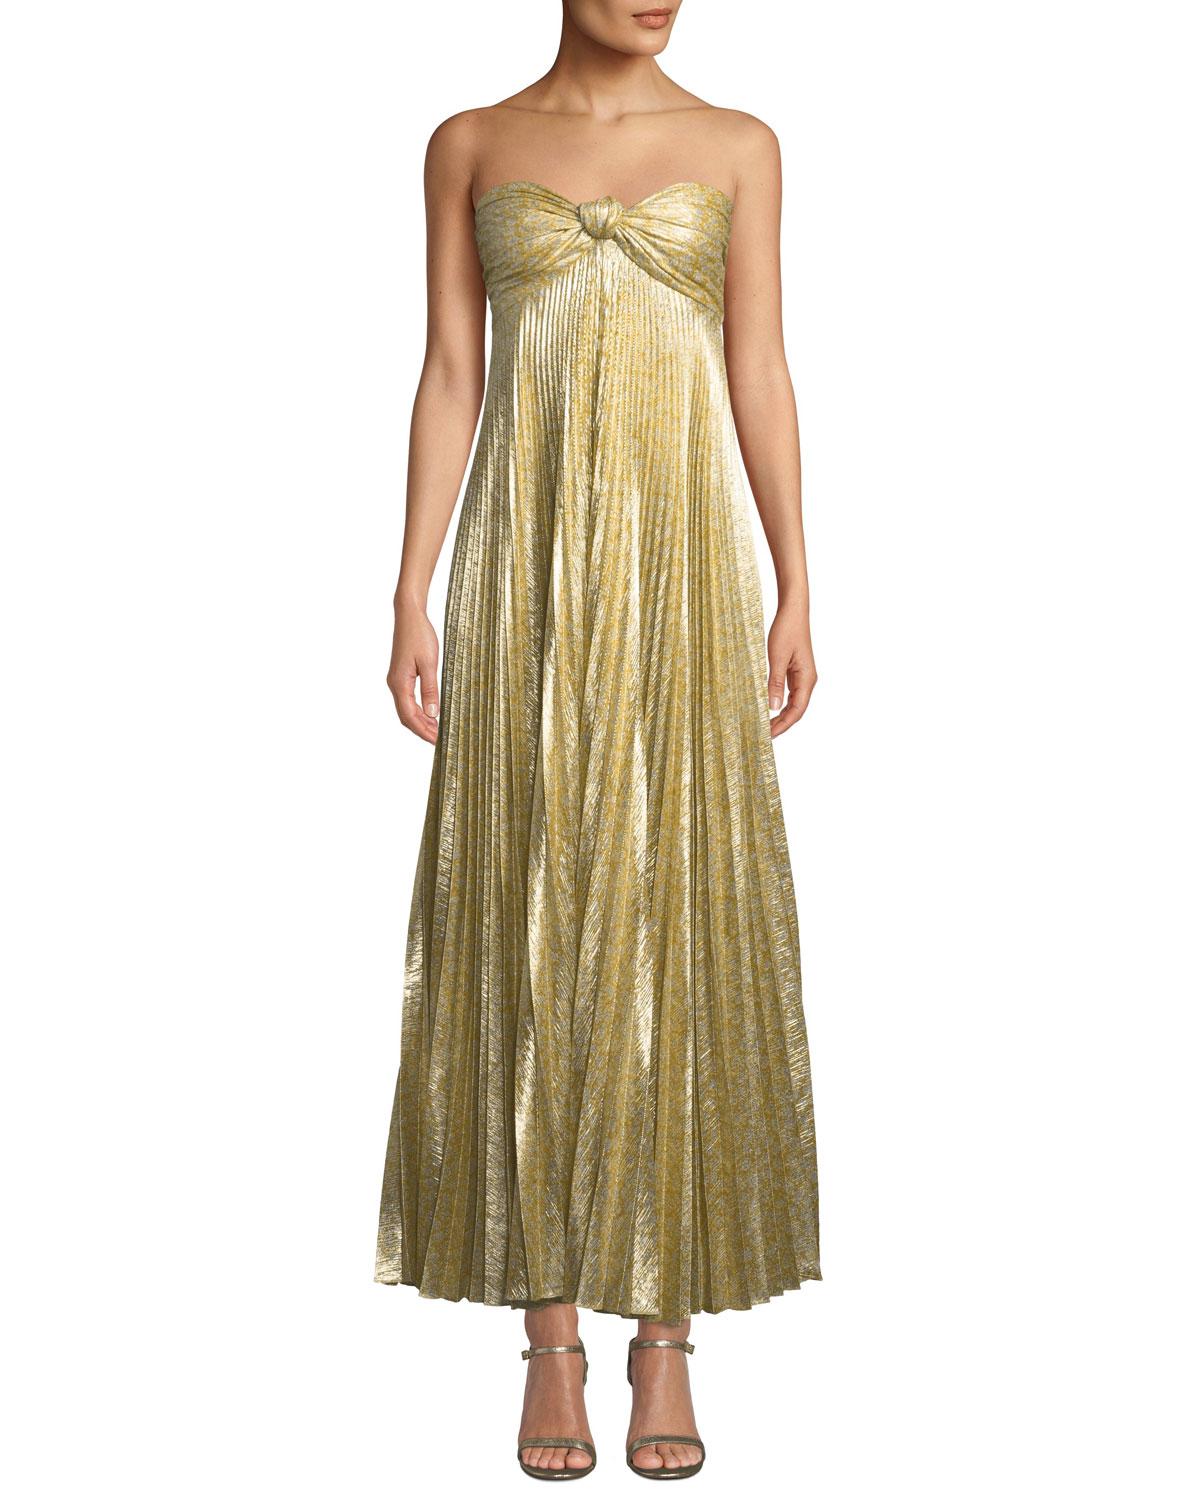 alexis gold dress